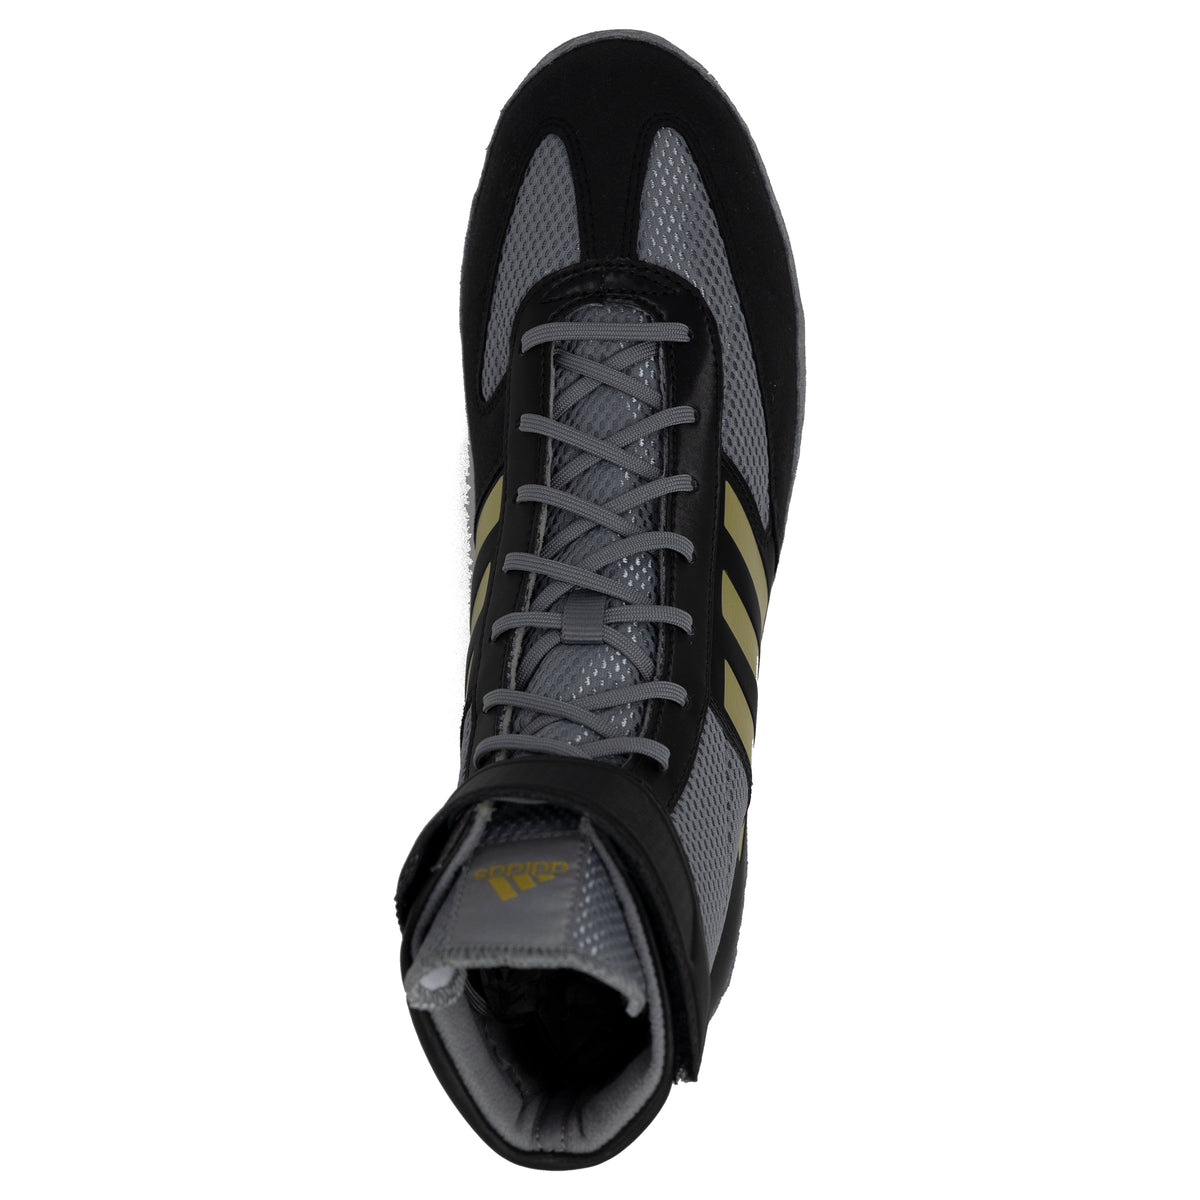 Adidas Combat Speed 5 | Grey/Black/Metallic Gold Wrestling Shoes